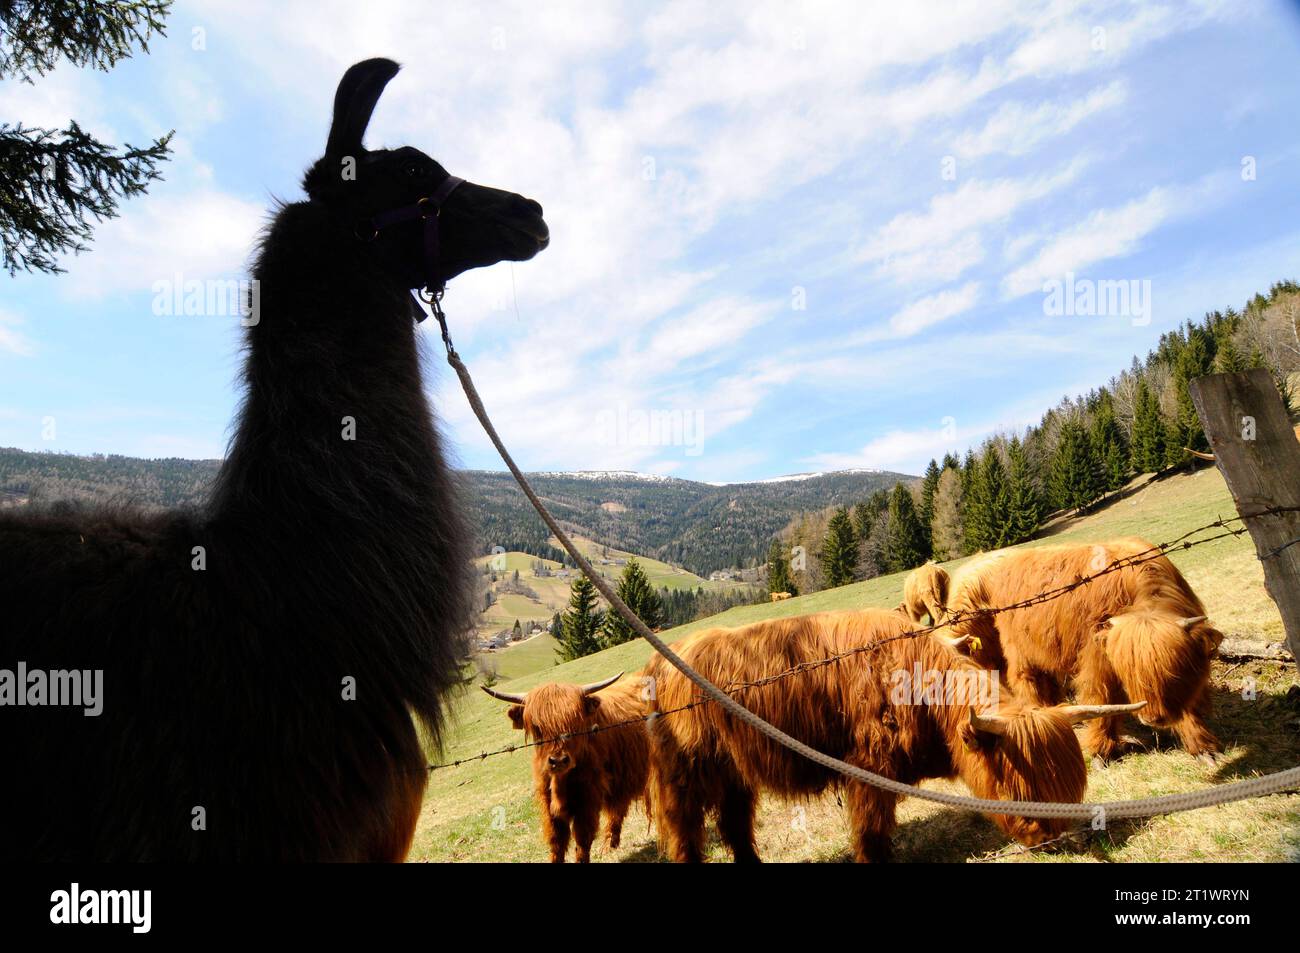 A Lama, Llama o Alpaca, Un Camelid sudamericano addomesticato A Lama, Llama o Alpaca Credit: Imago/Alamy Live News Foto Stock